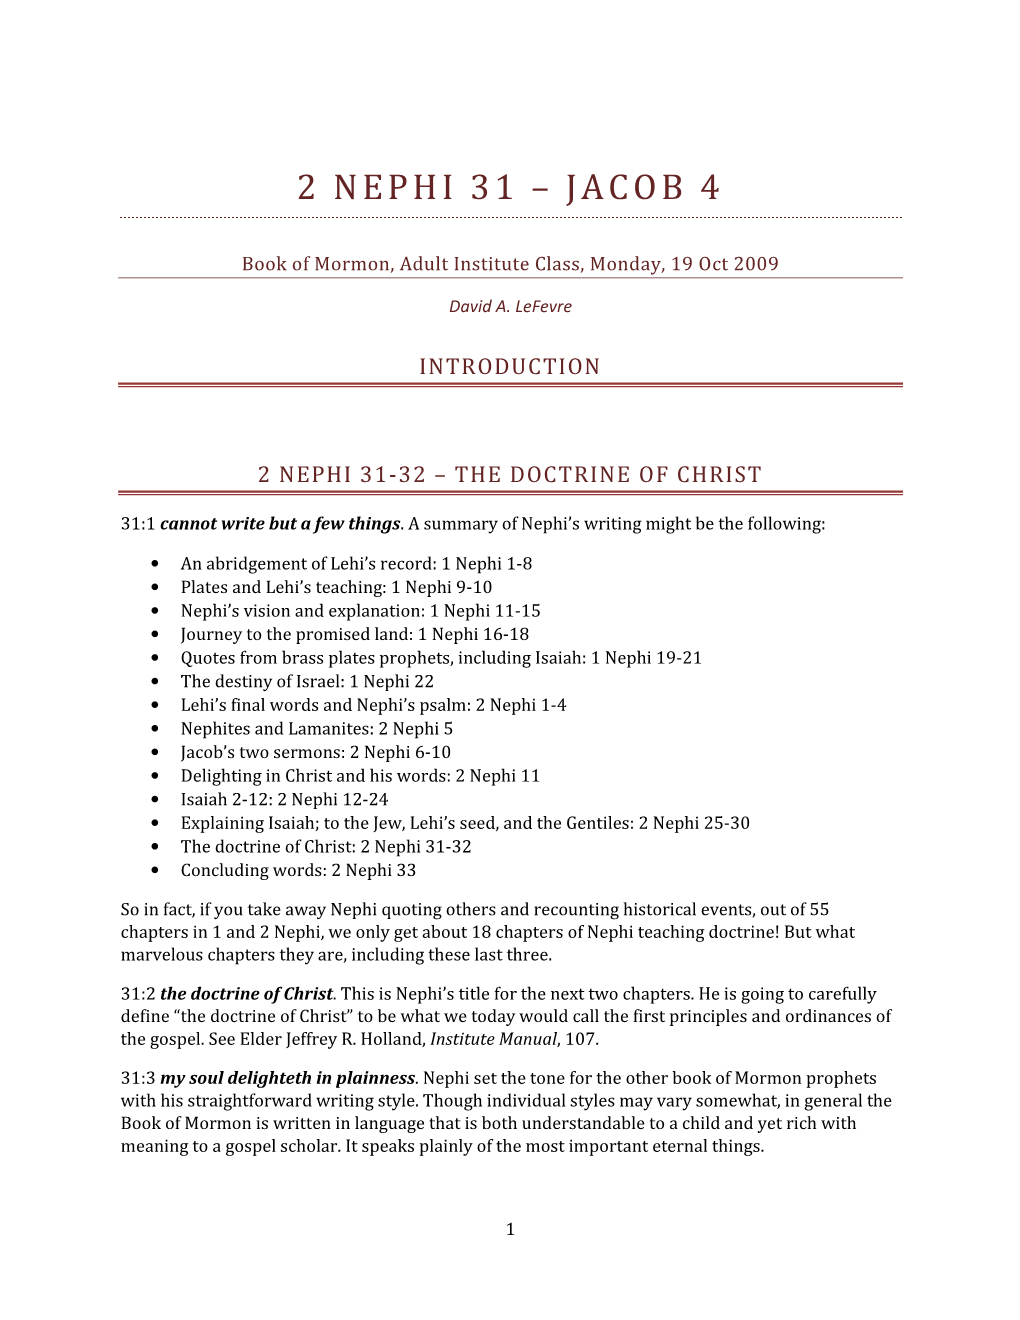 2 Nephi 31 – Jacob 4